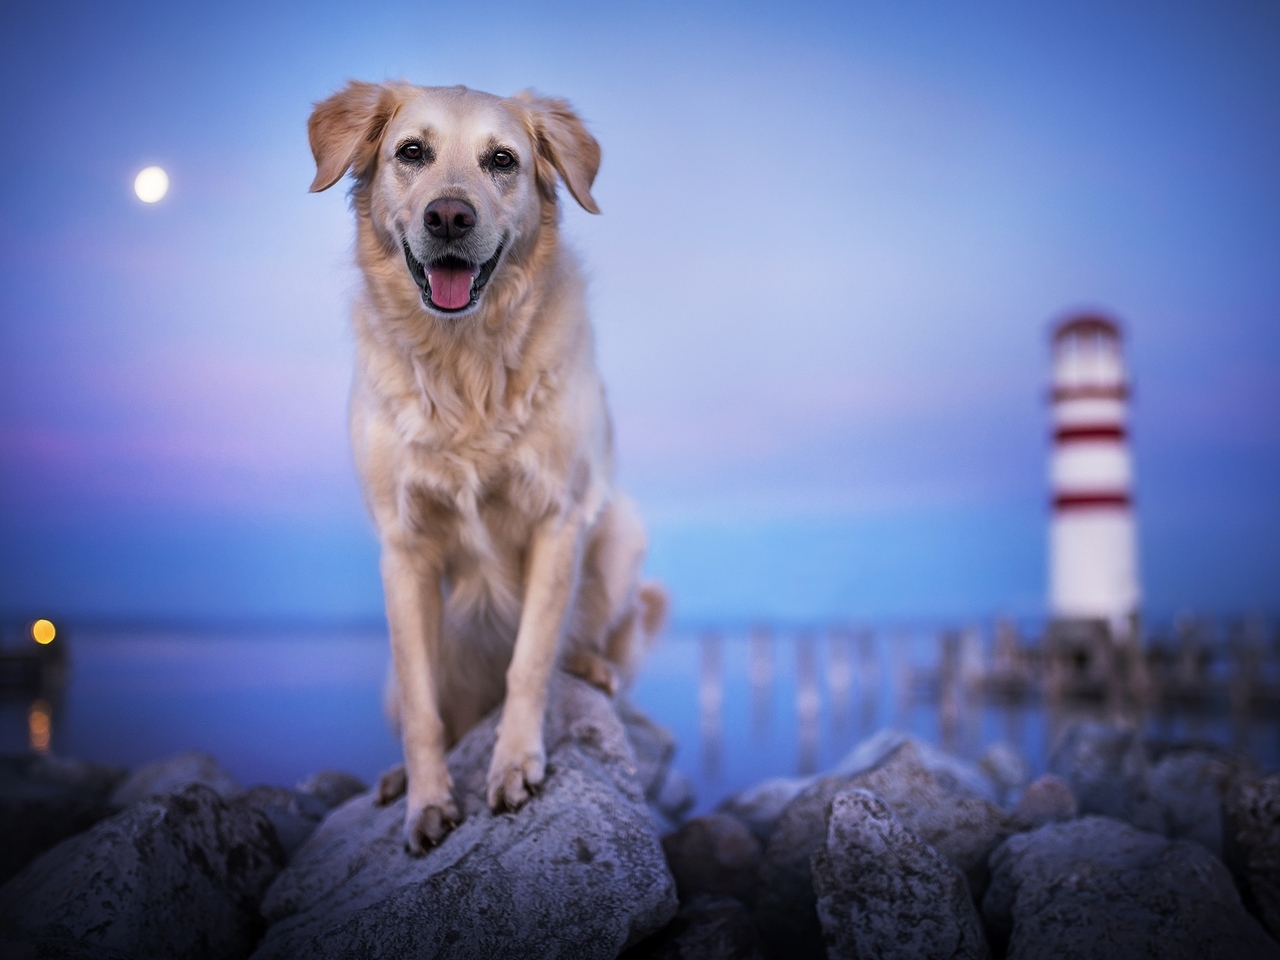 Image: Dog, rocks, sea, lighthouse, night, moon